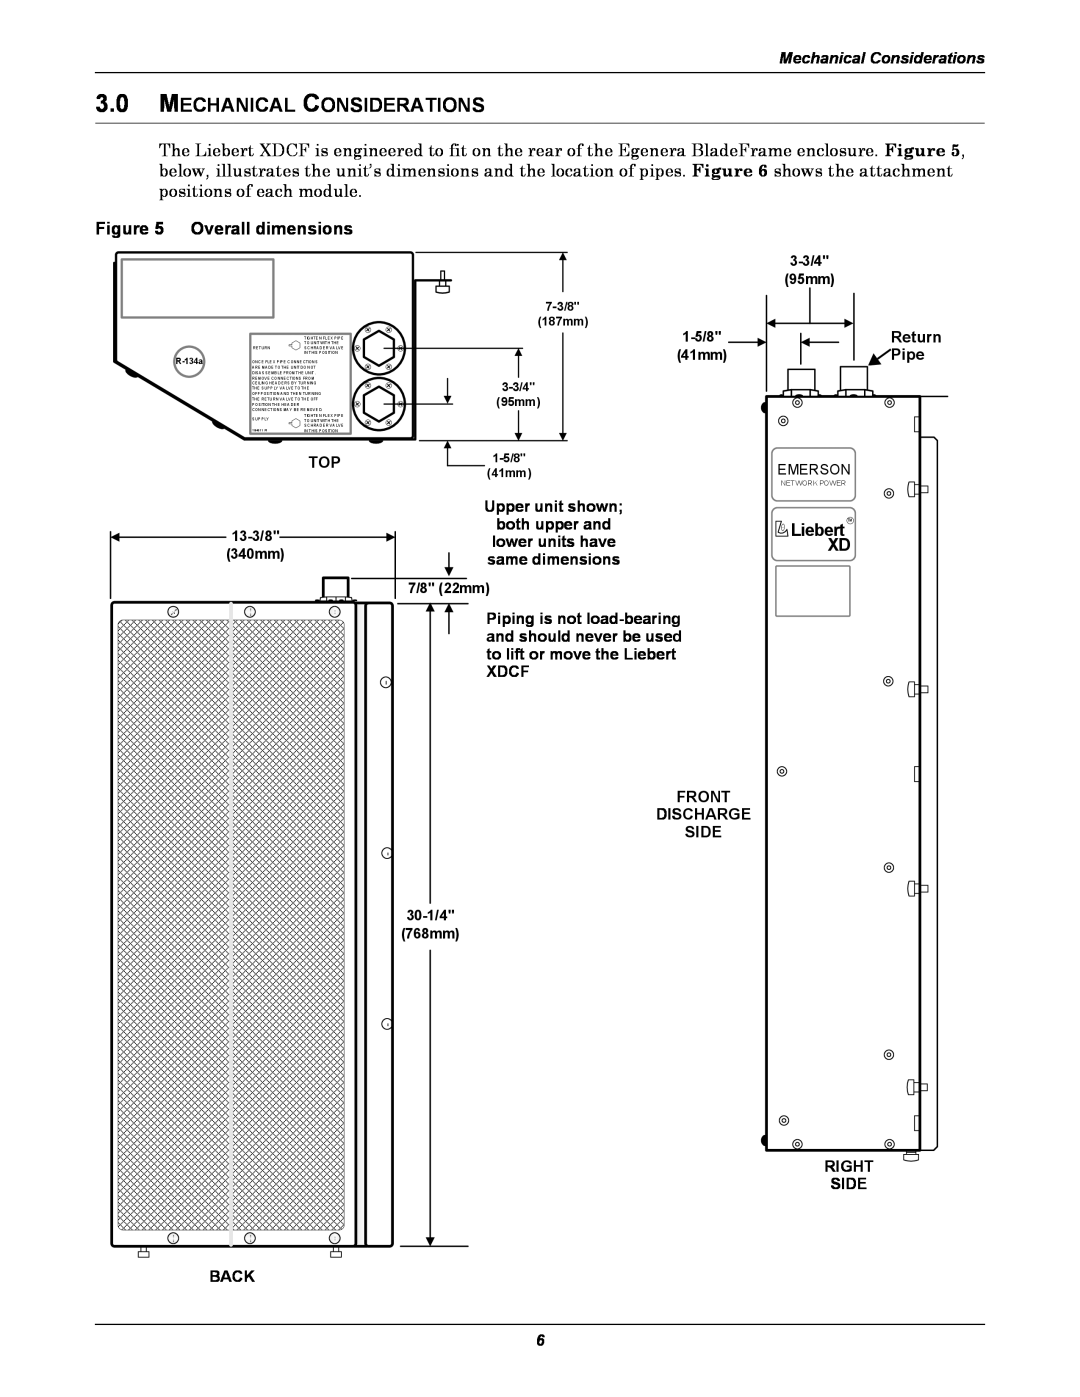 Emerson XDCF Mechanical Considerations, Overall dimensions, Liebert TM XD, 7-3/8 187mm, 3-3/4 95mm 1-5/8 41mm, R-134a 